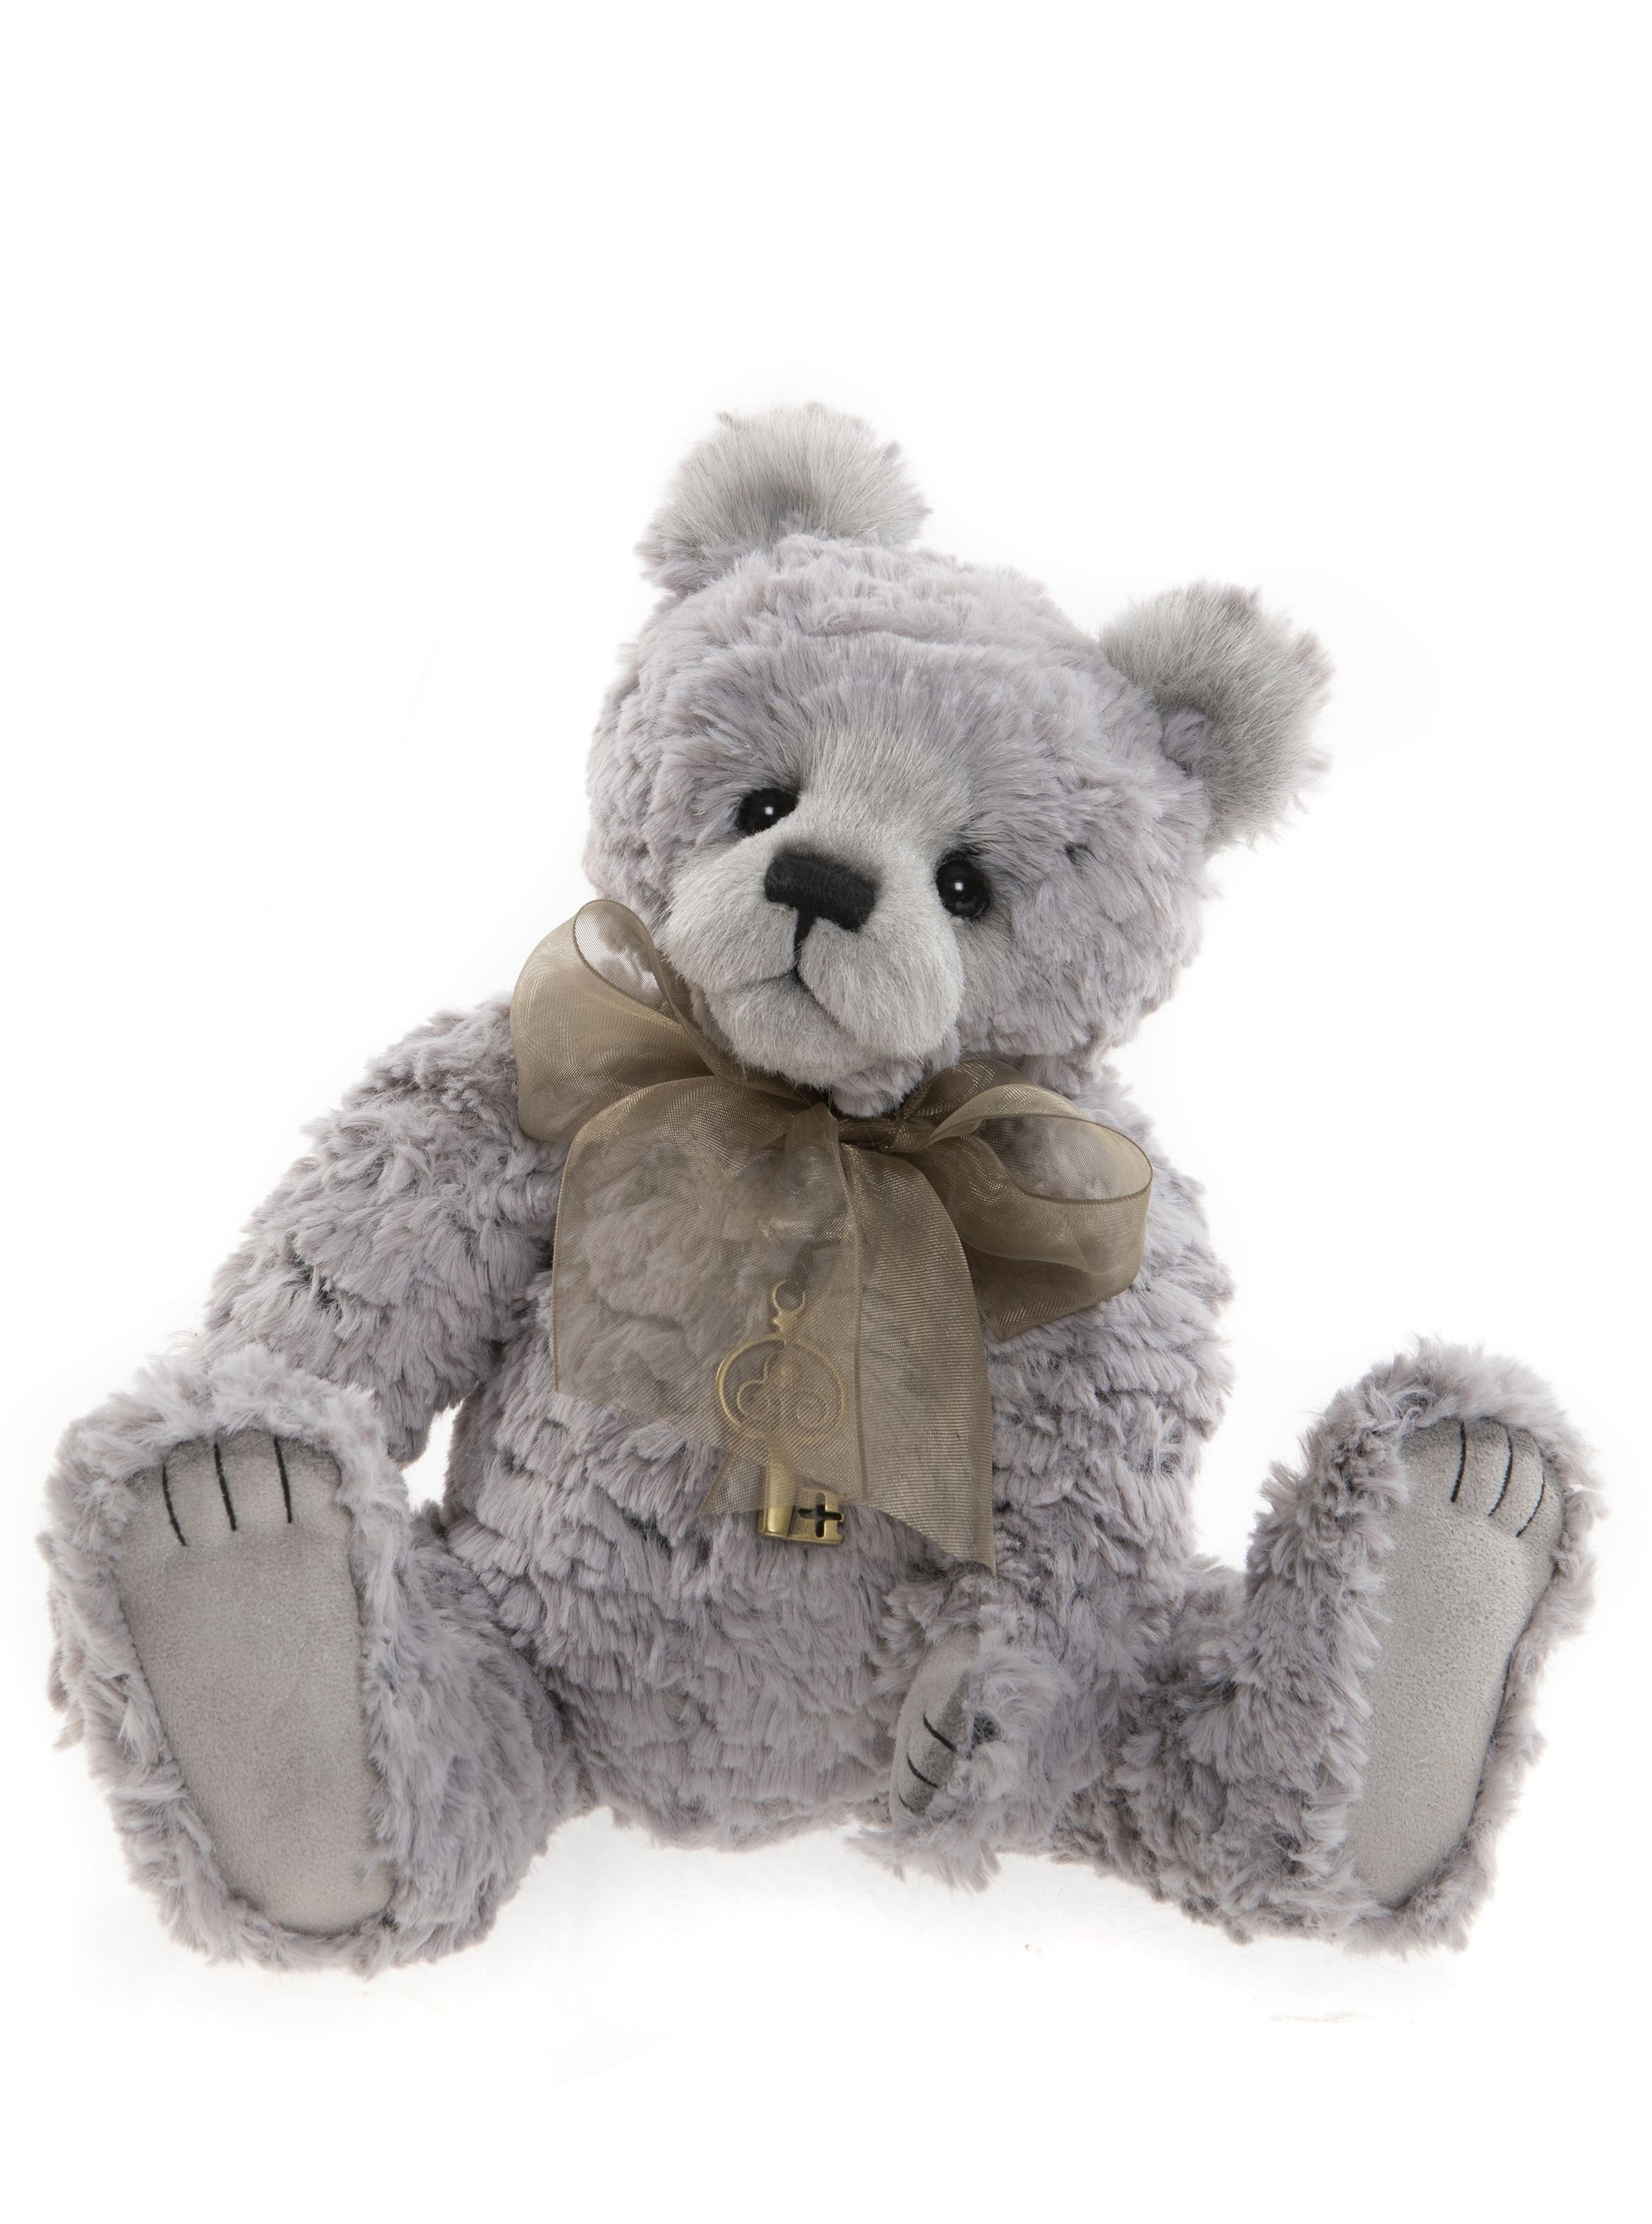 Ronan - Charlie Bears Plush Collection - 33cm